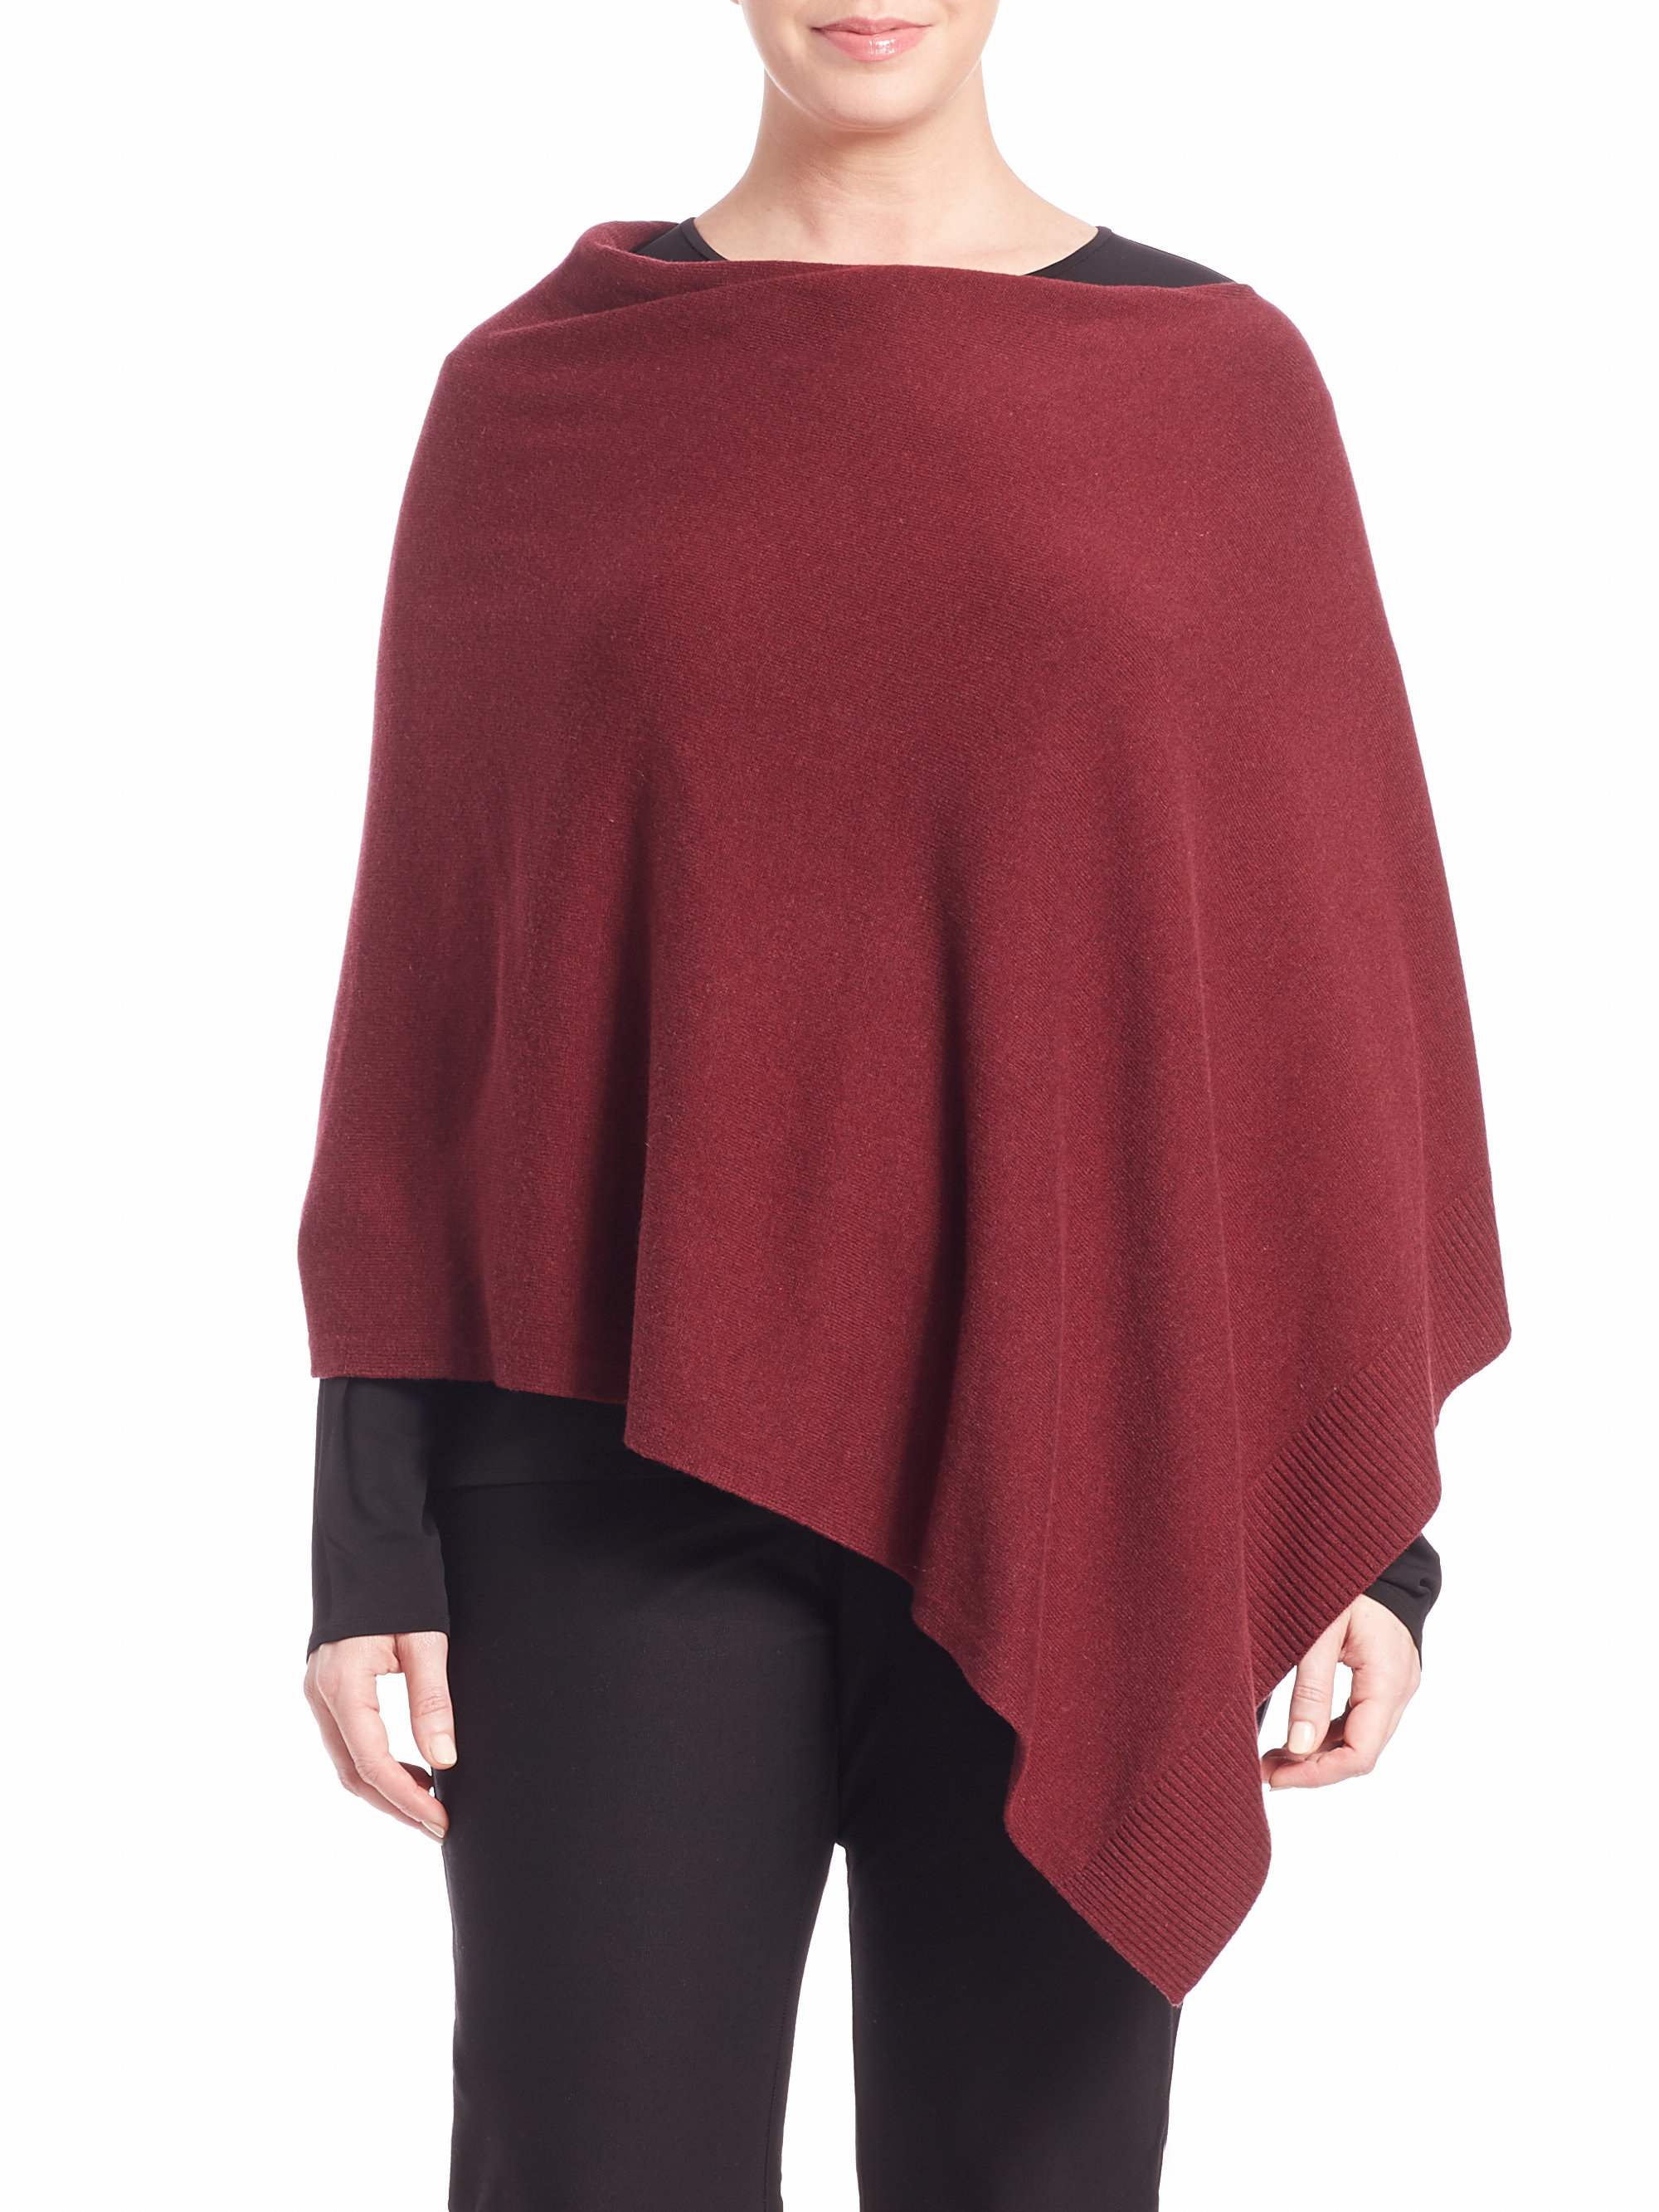 Lyst - Eileen Fisher Asymmetrical Wool Poncho in Red